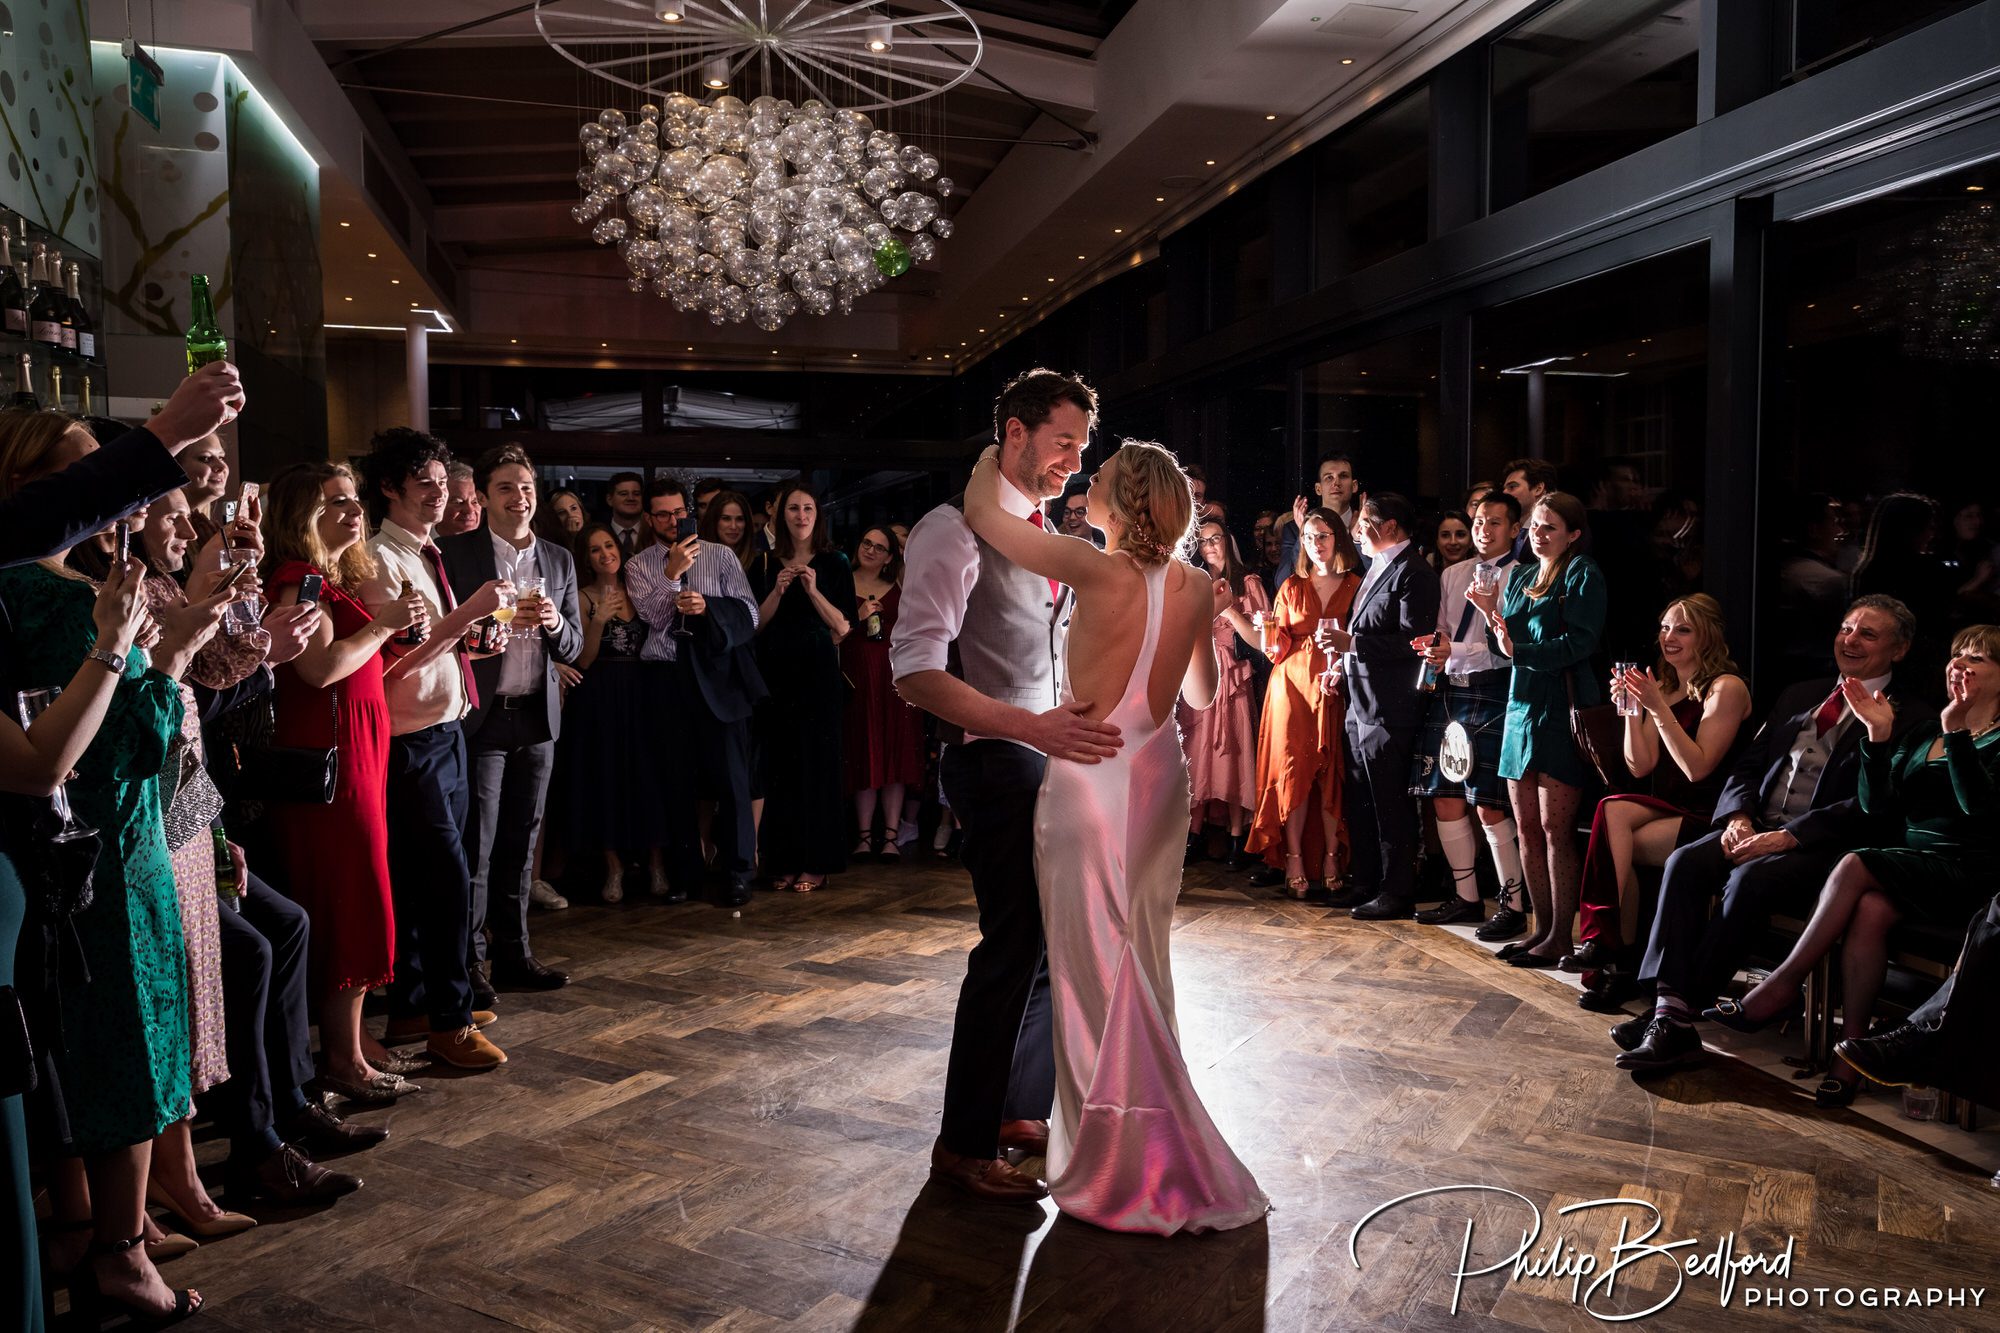 Cannizaro House Wedding: Lorna & Elliott share their first dance.